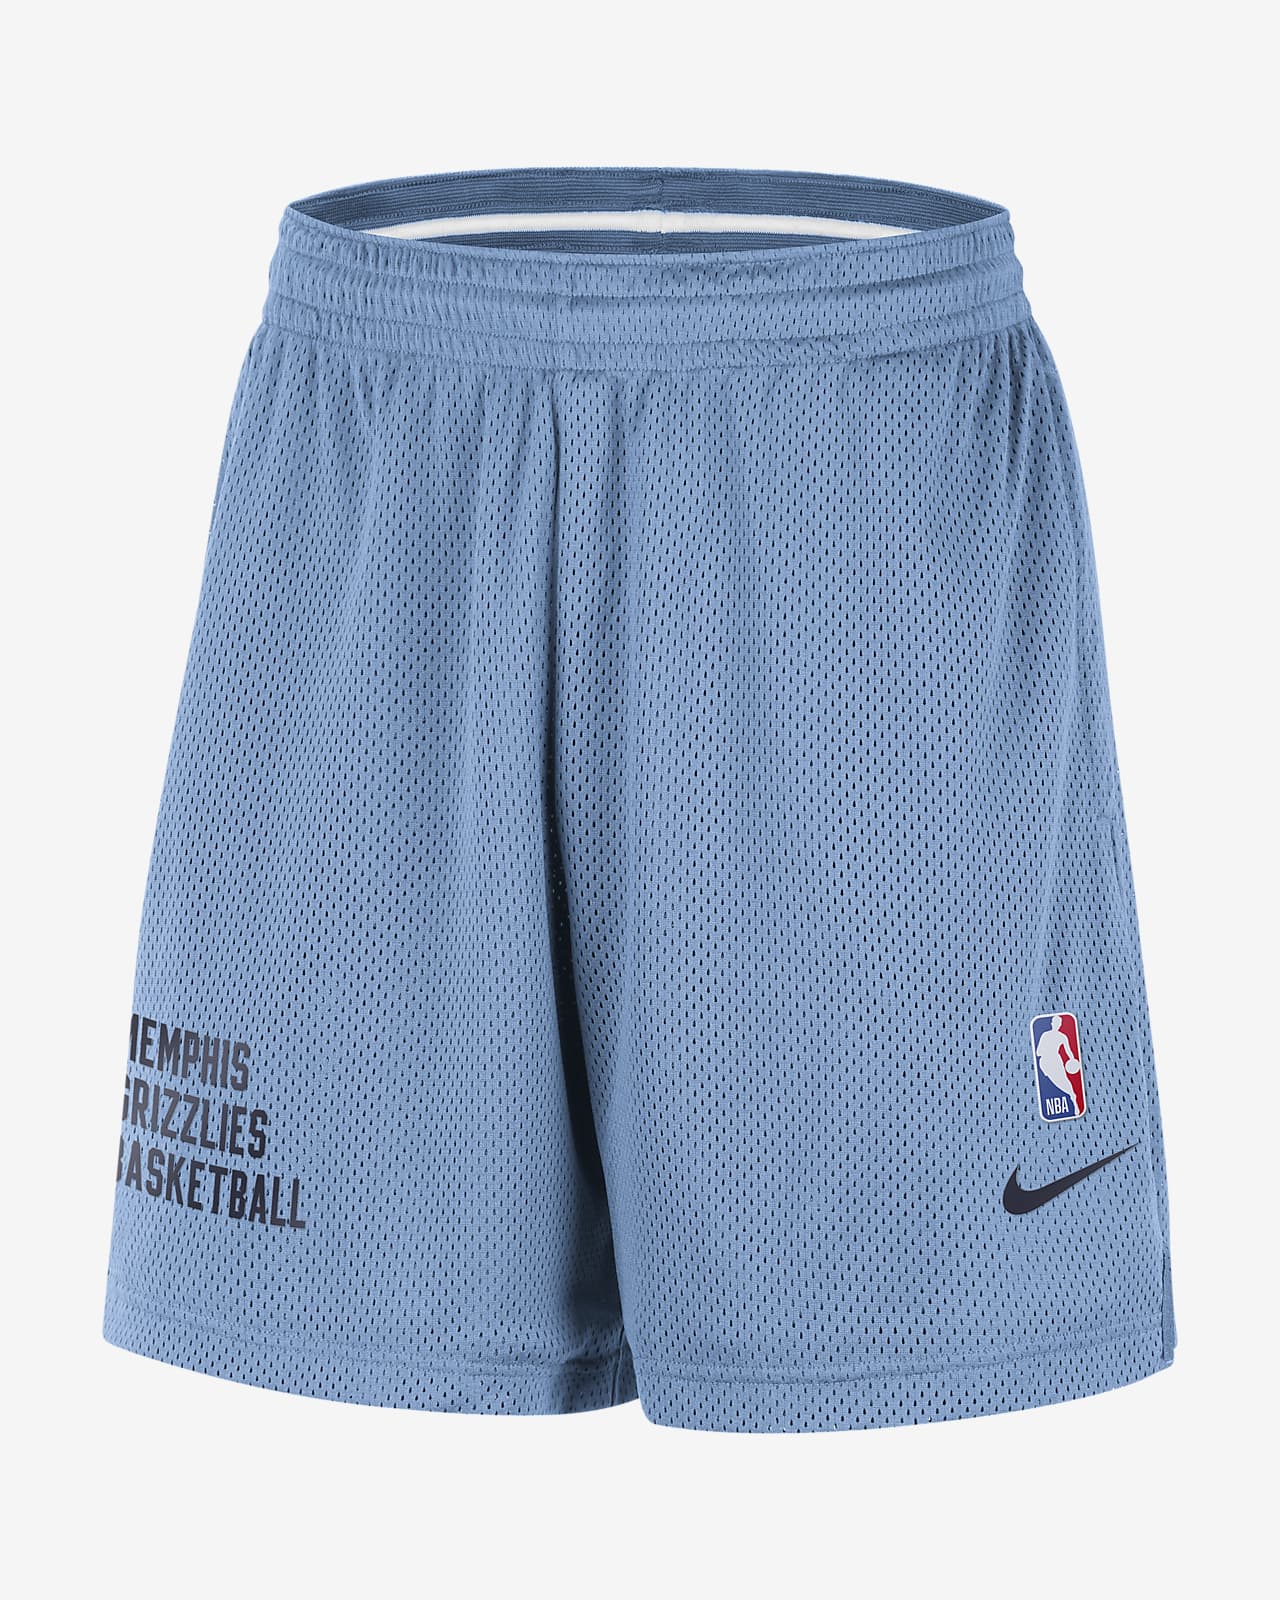 Memphis Grizzlies Men's Nike NBA Mesh Shorts